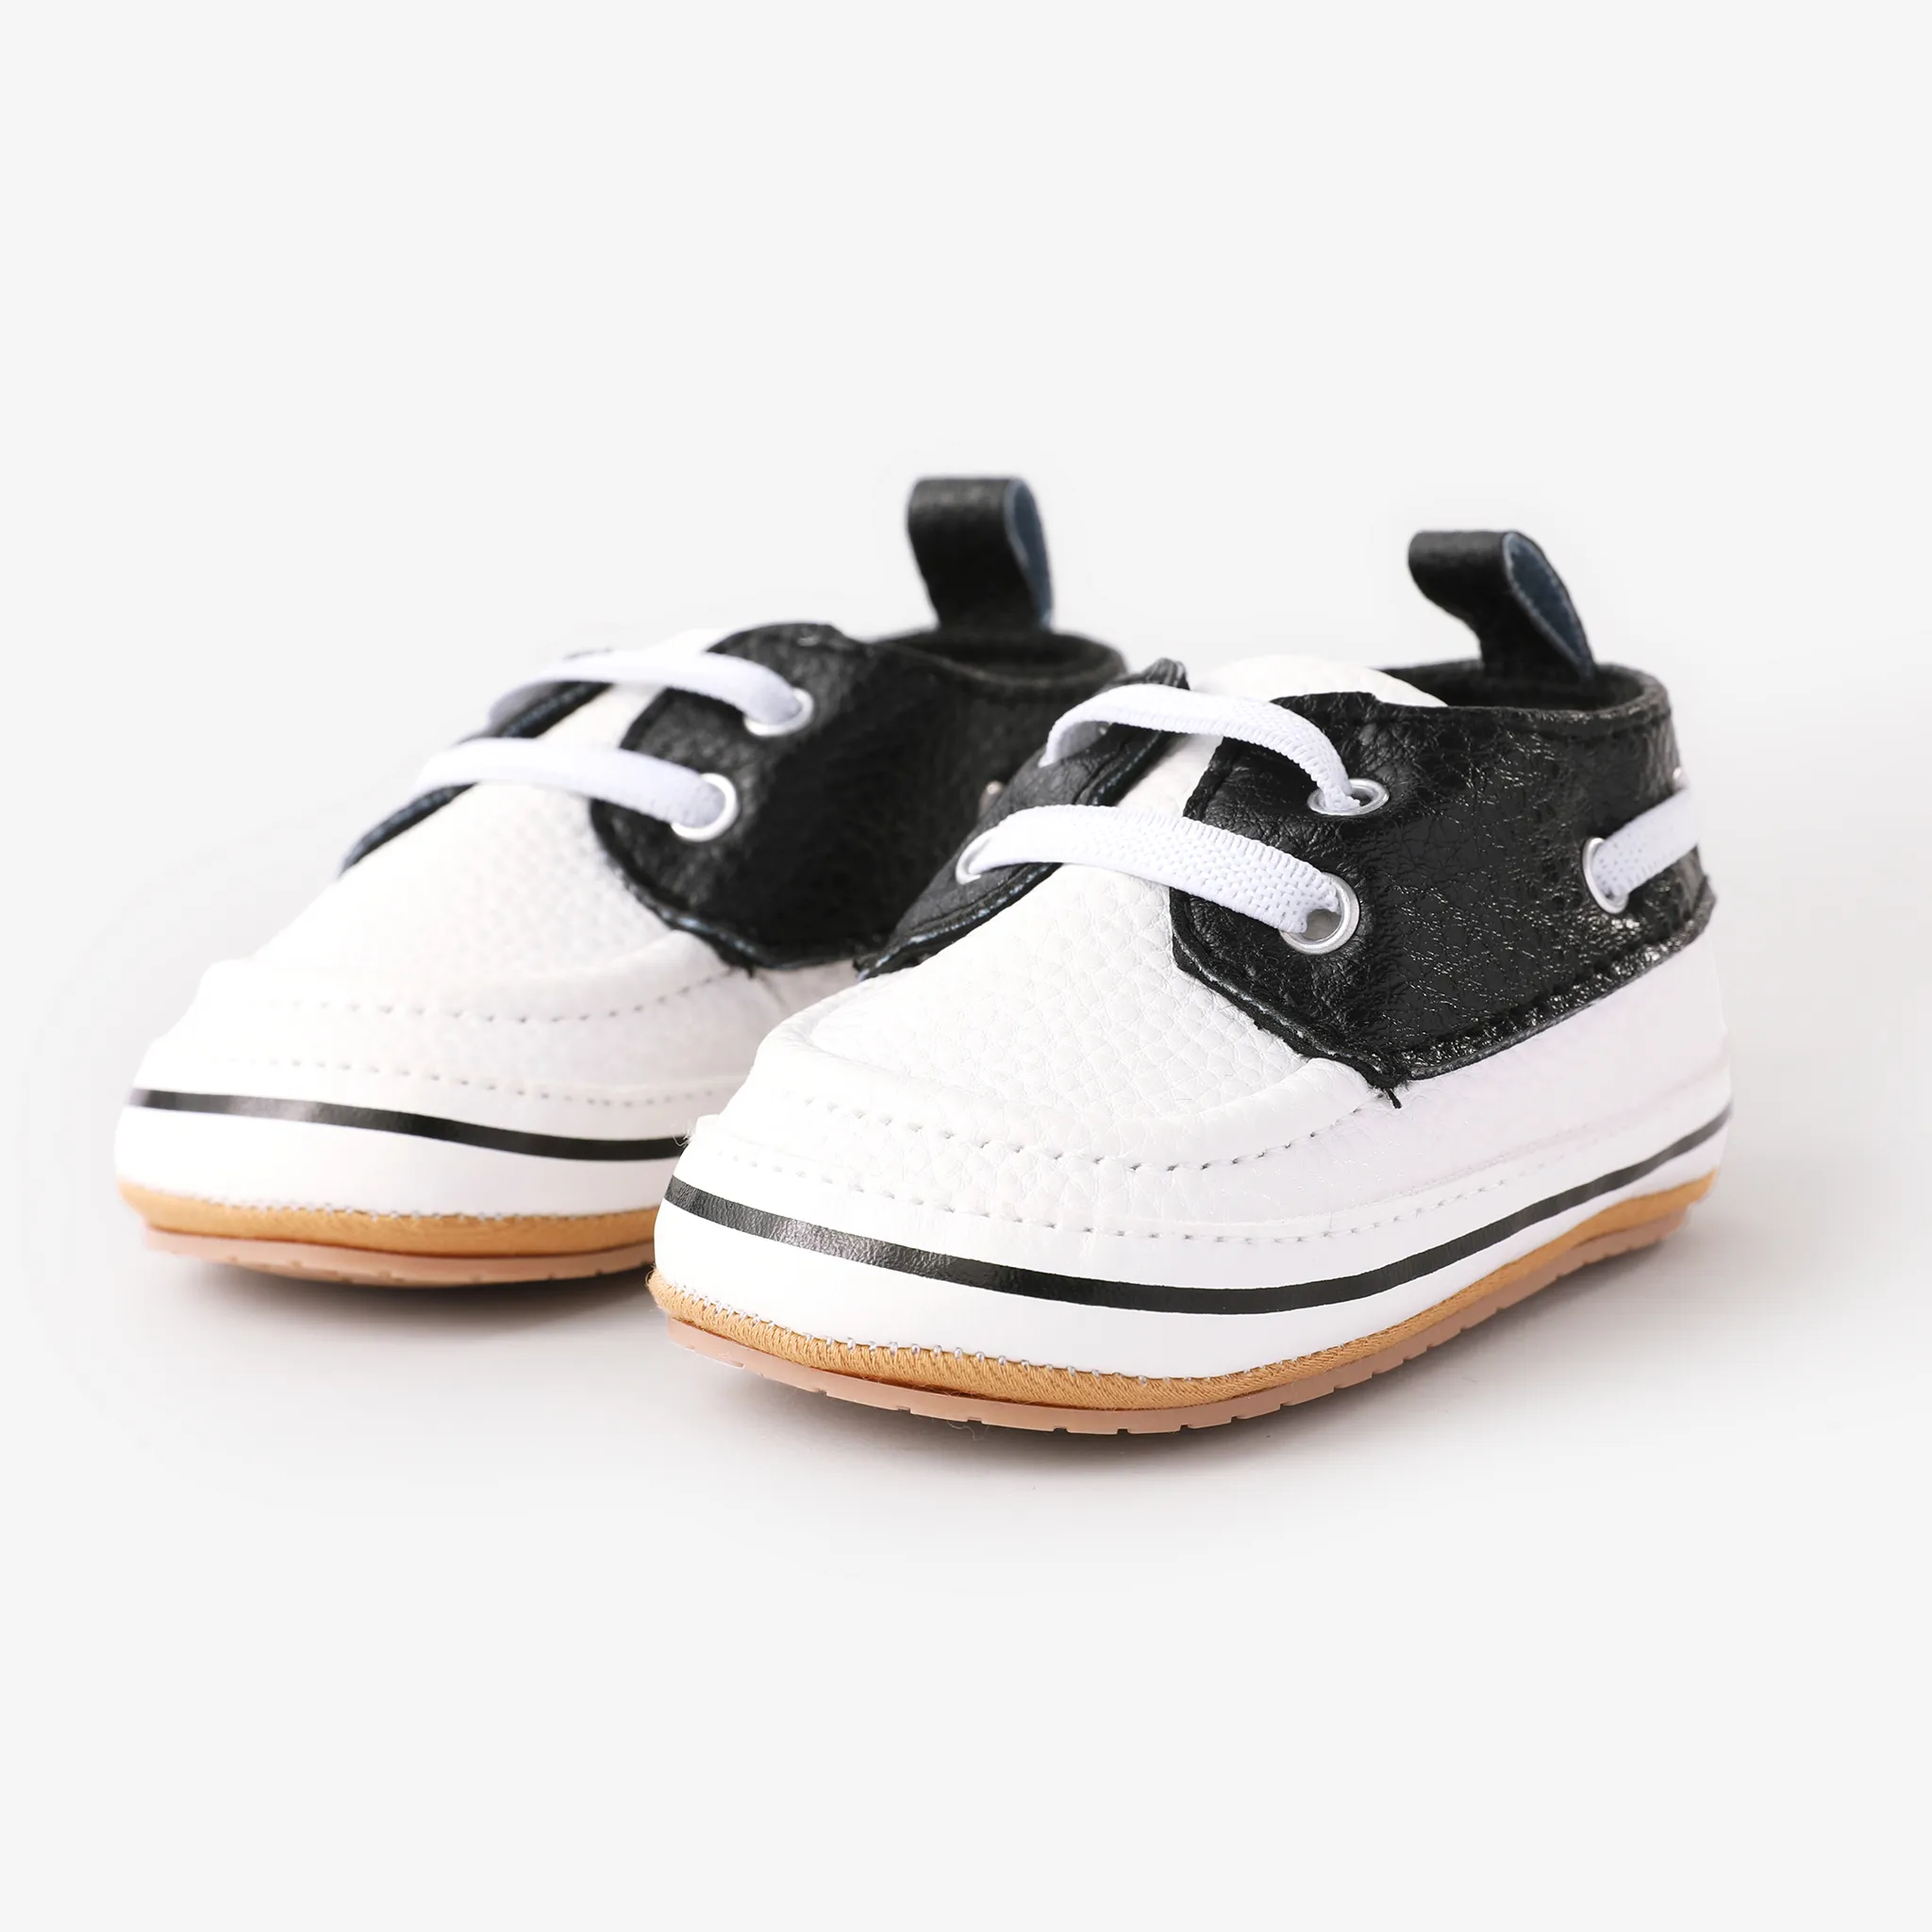 Baby & Toddler Color-block Lace-up Design Soft Sole Prewalker Shoes